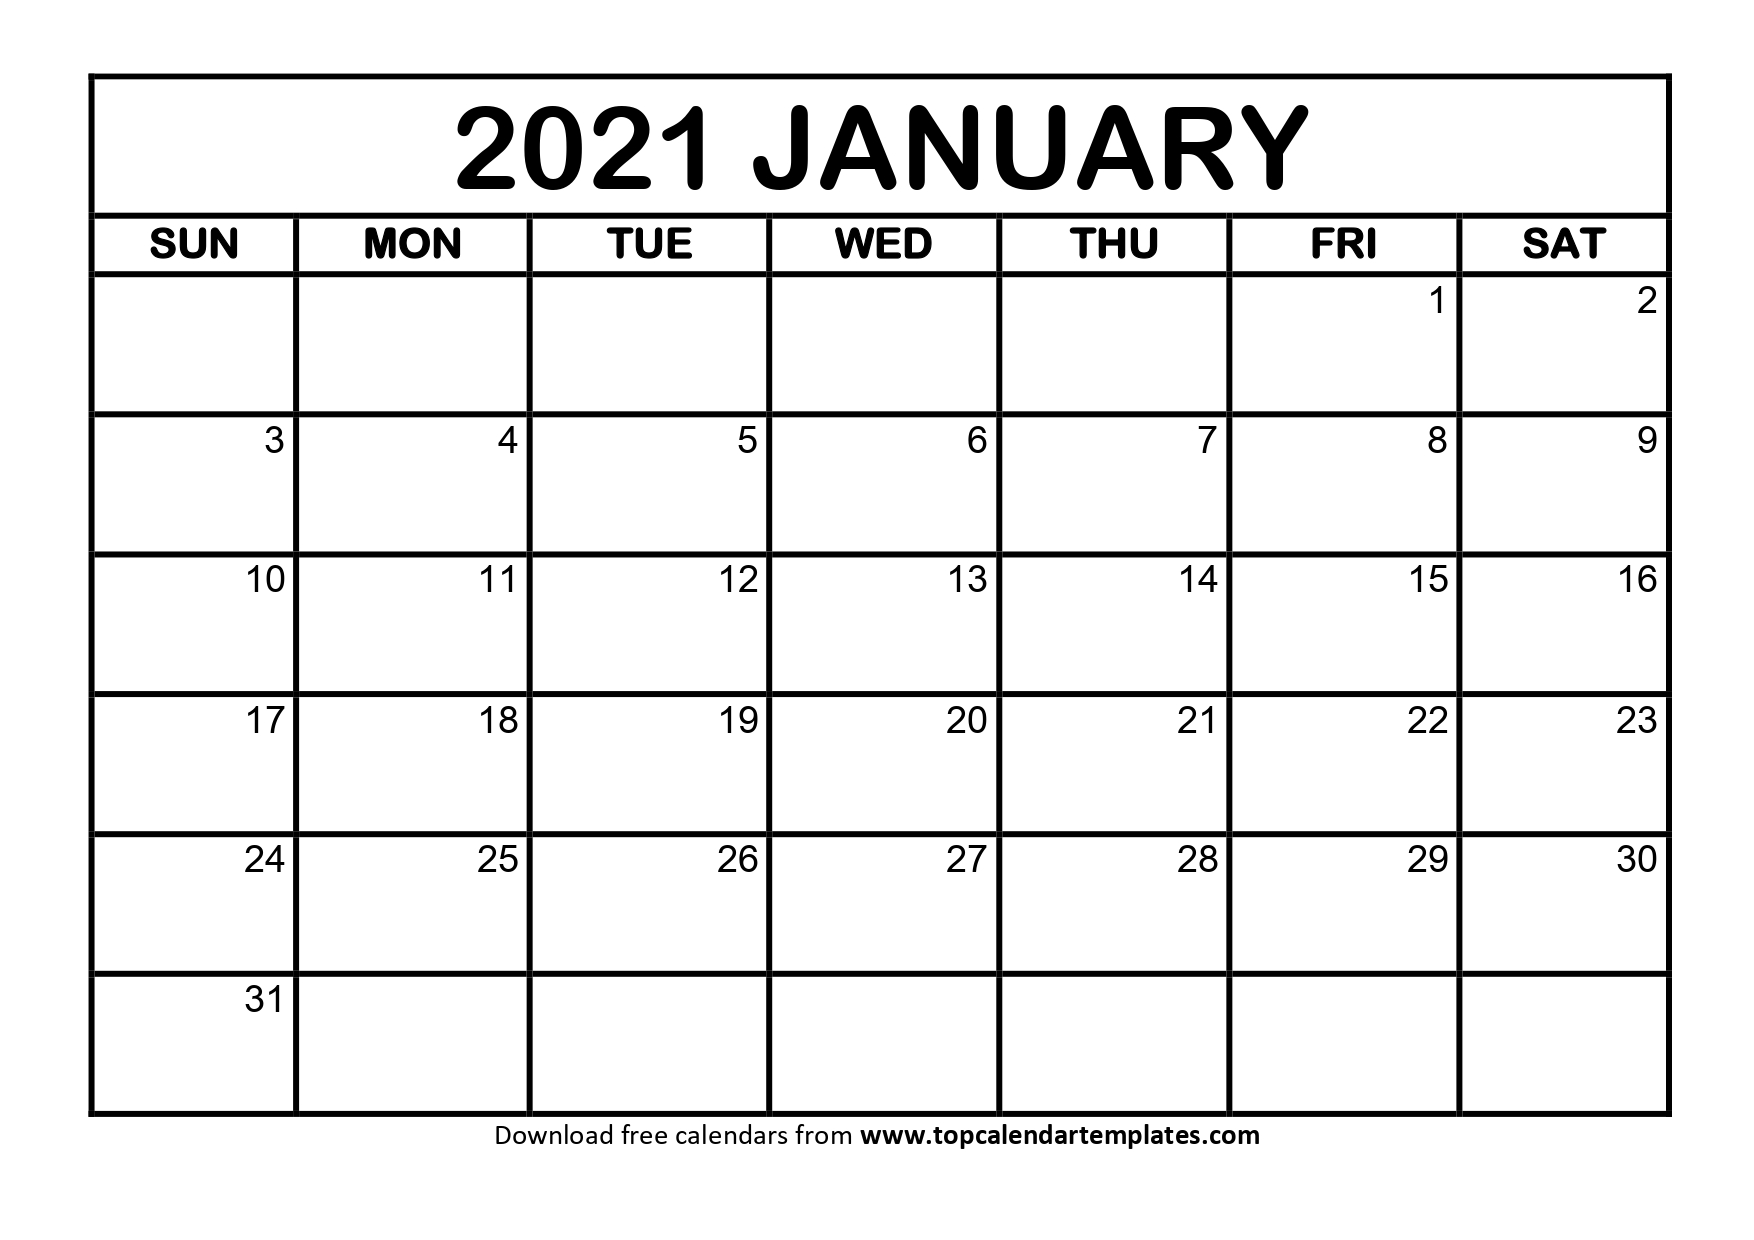 January 2021 Printable Calendar - Editable Templates